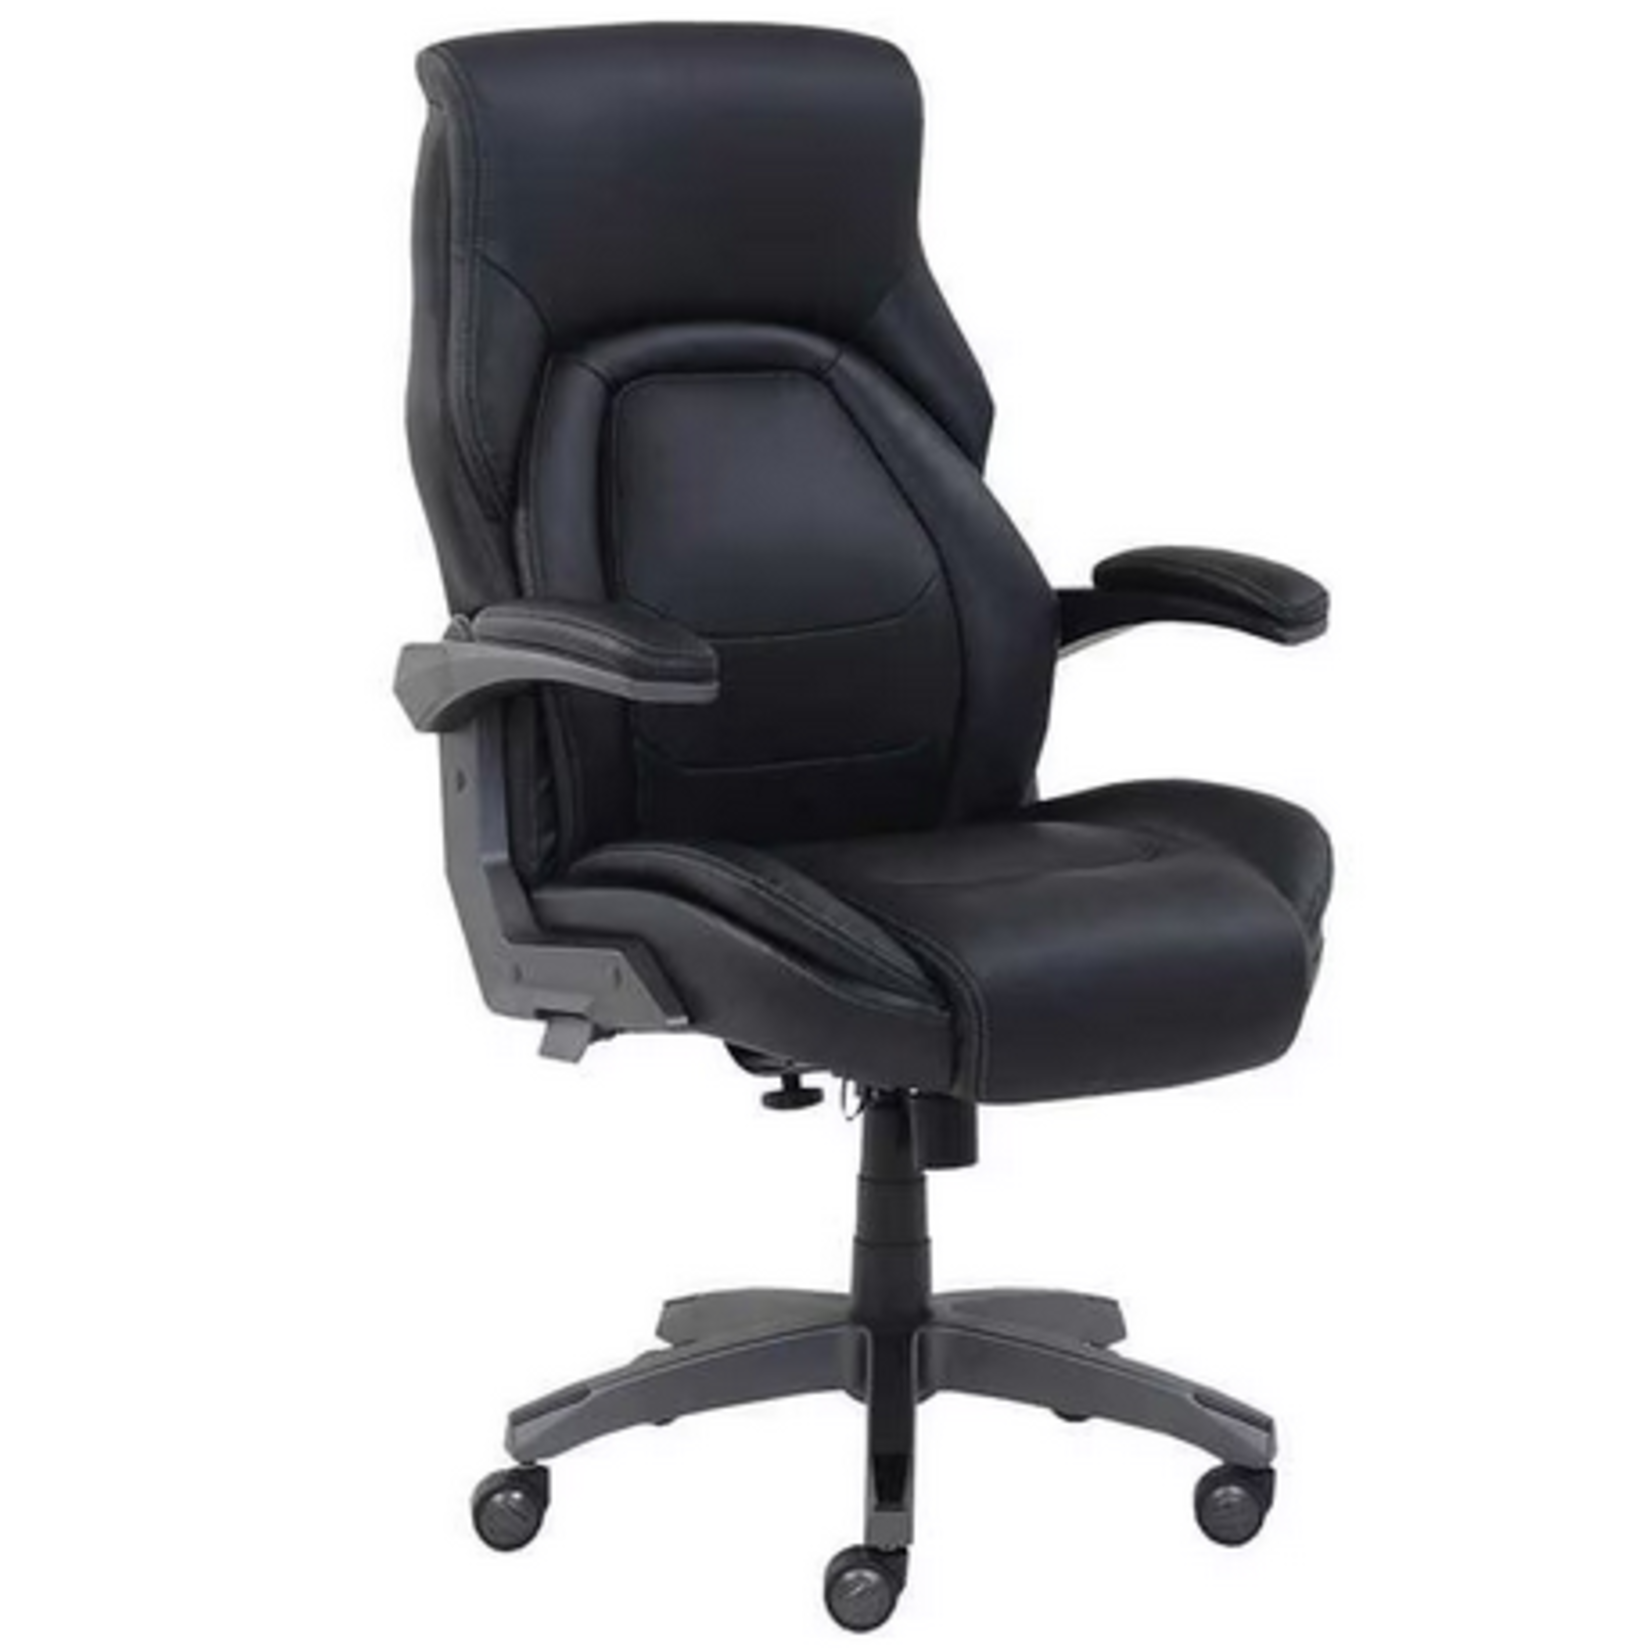 LazBoy Office Chair - Black